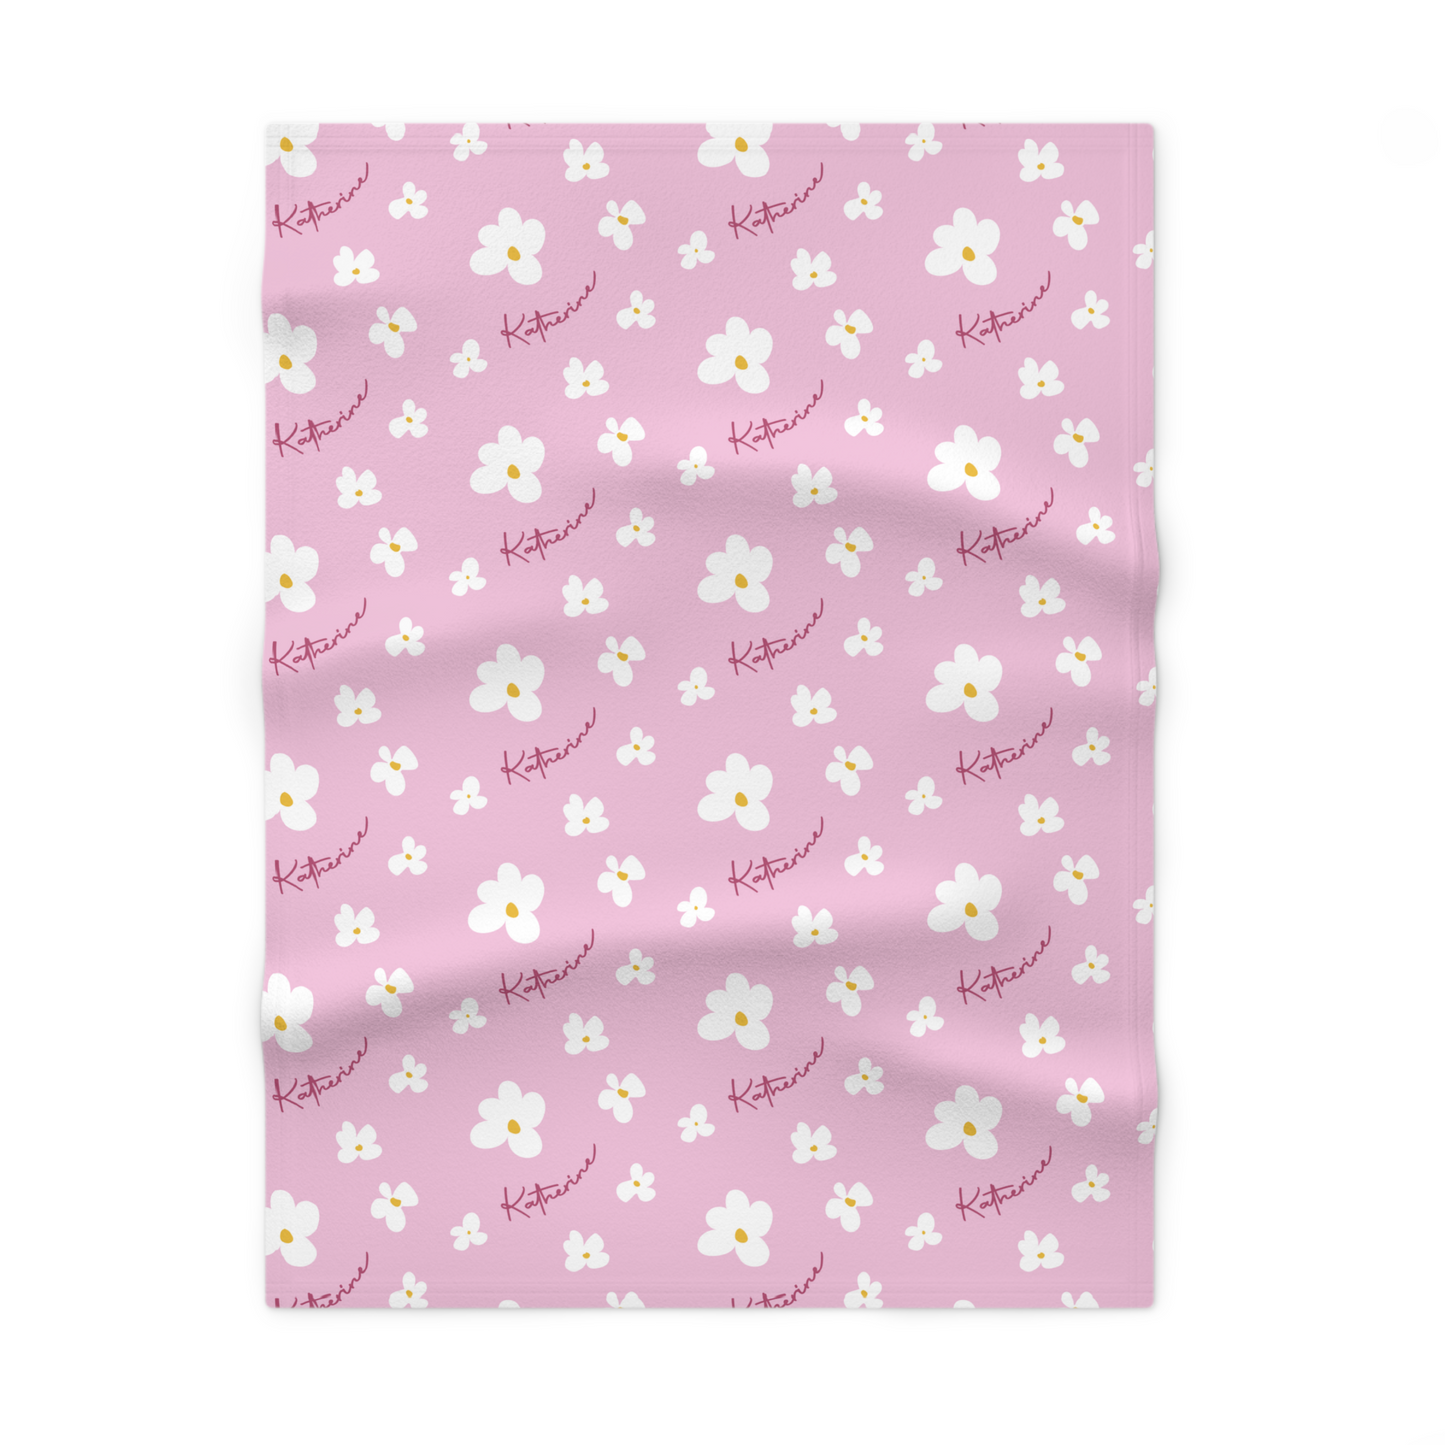 Fleece personalized baby blanket in pink daisy pattern laid flat